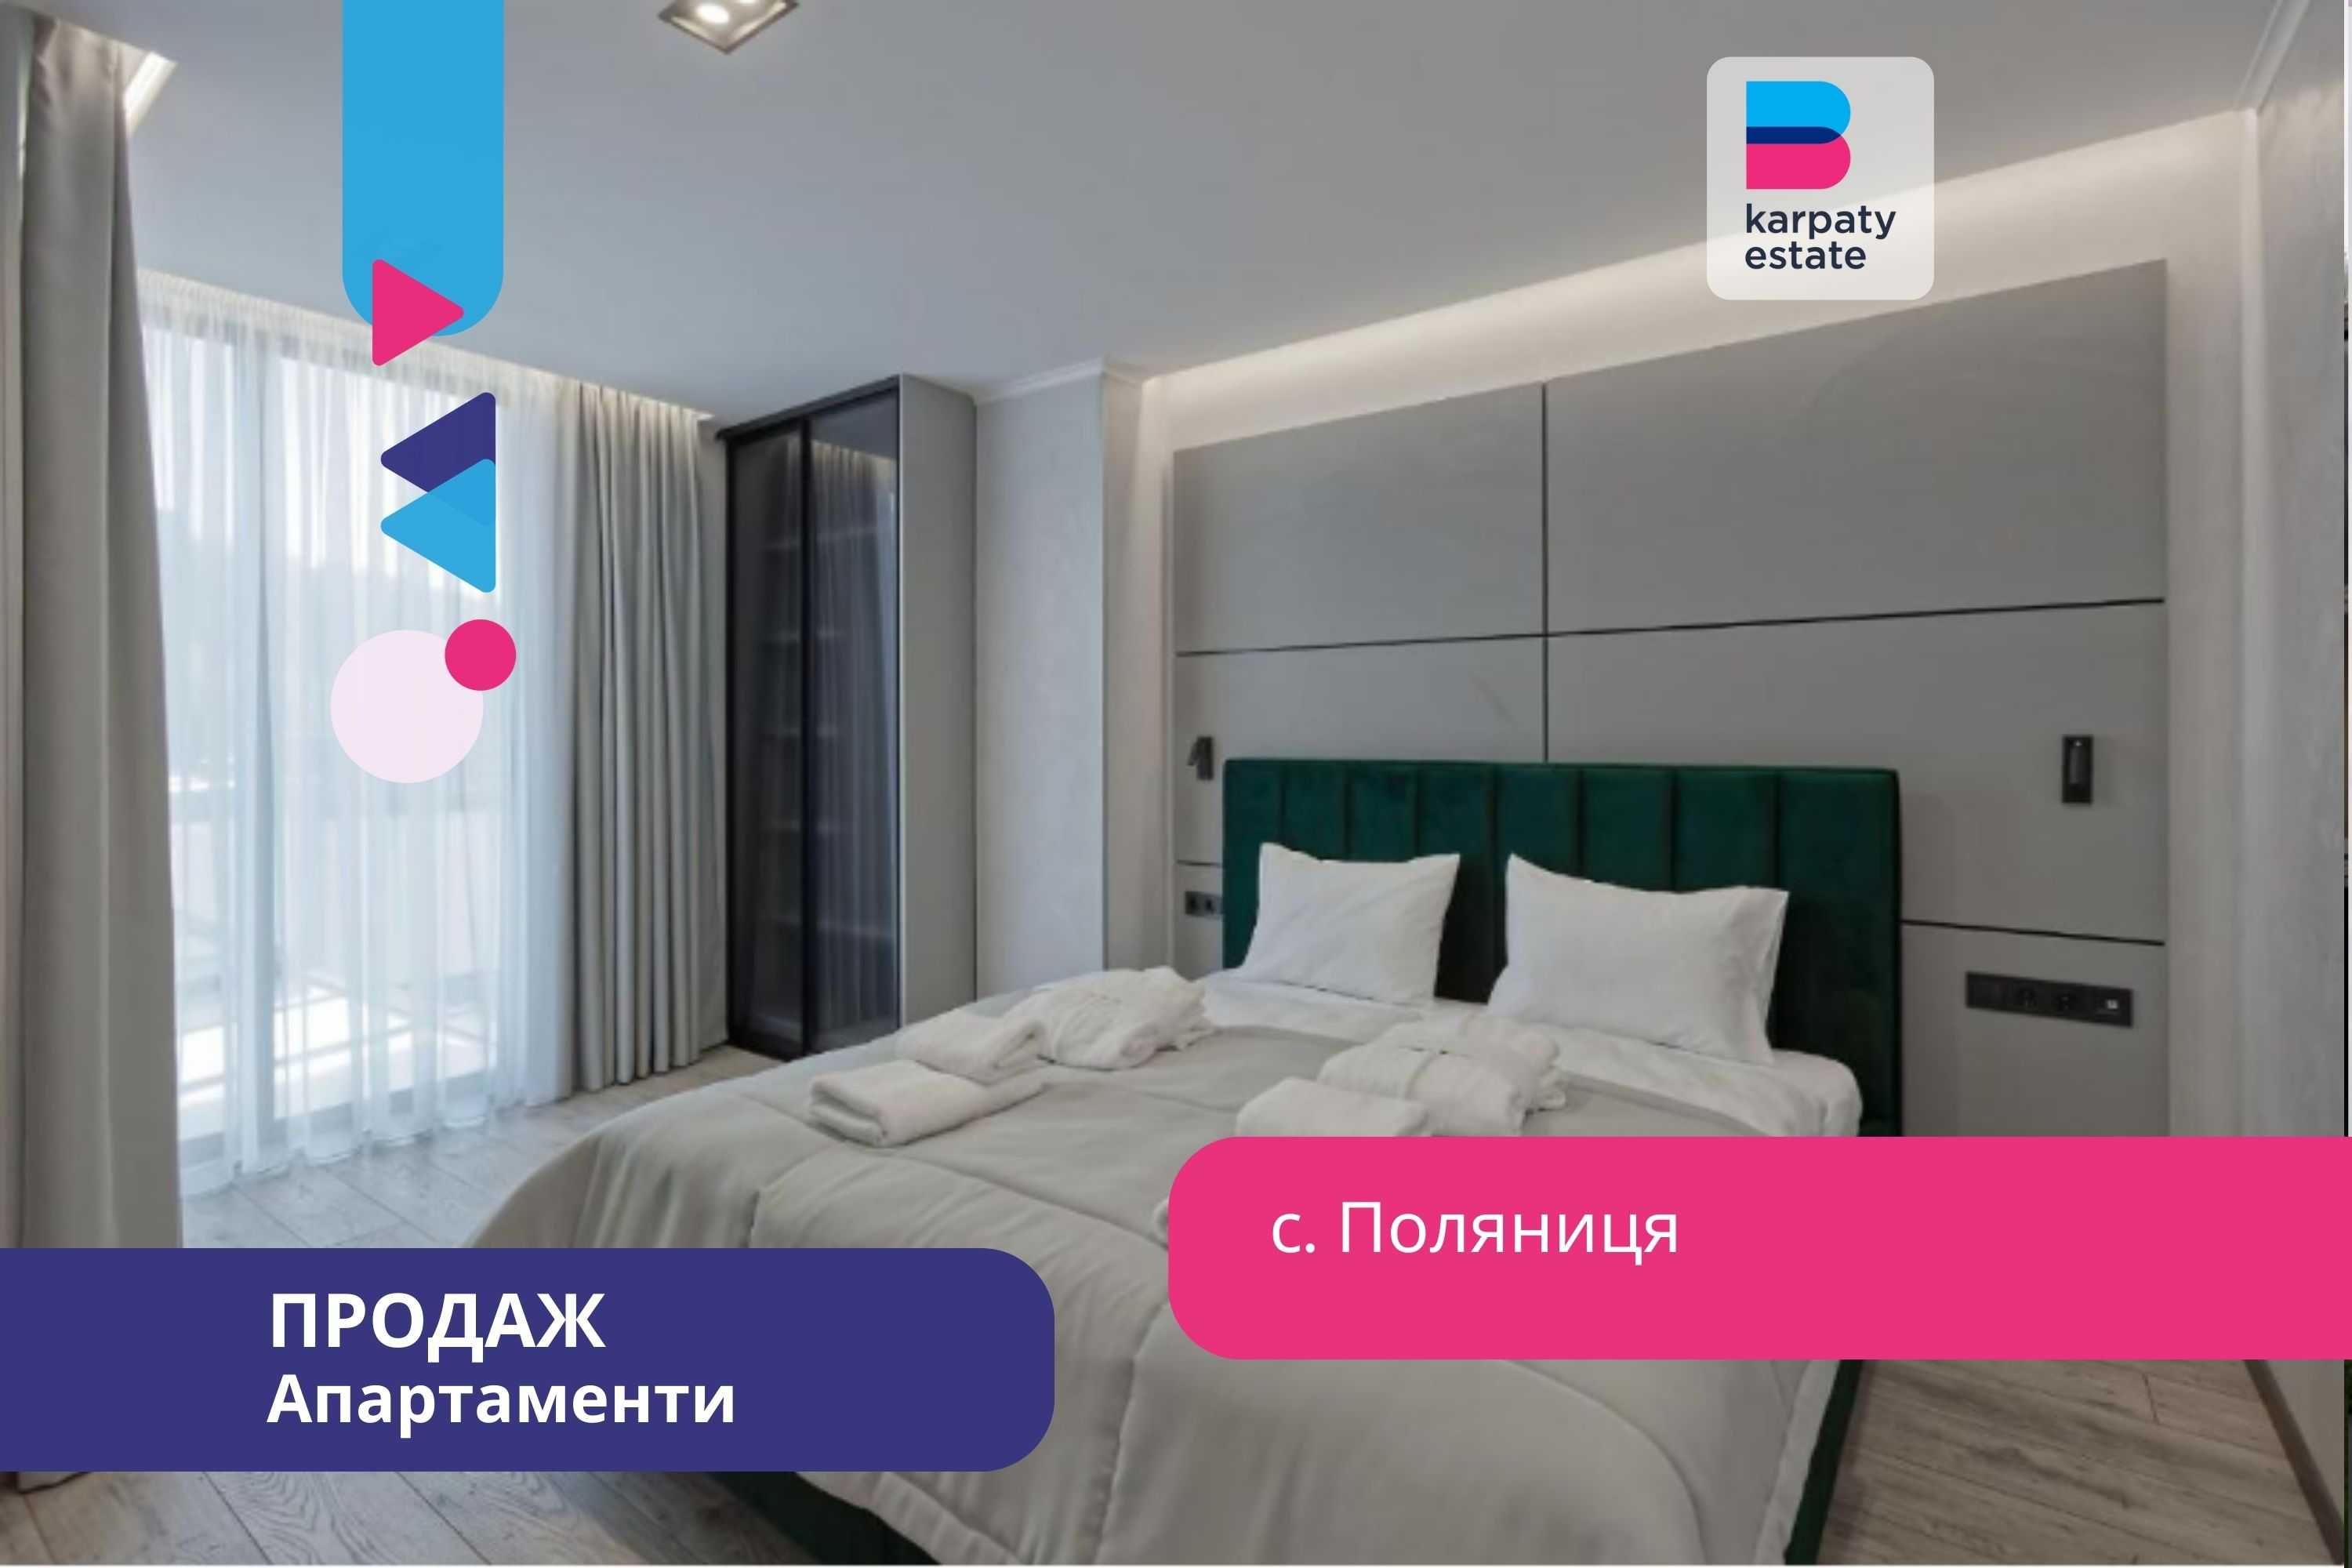 1-к. апартаменти 43 м2 з ремонтом в Rest&Ski в с. Поляниця